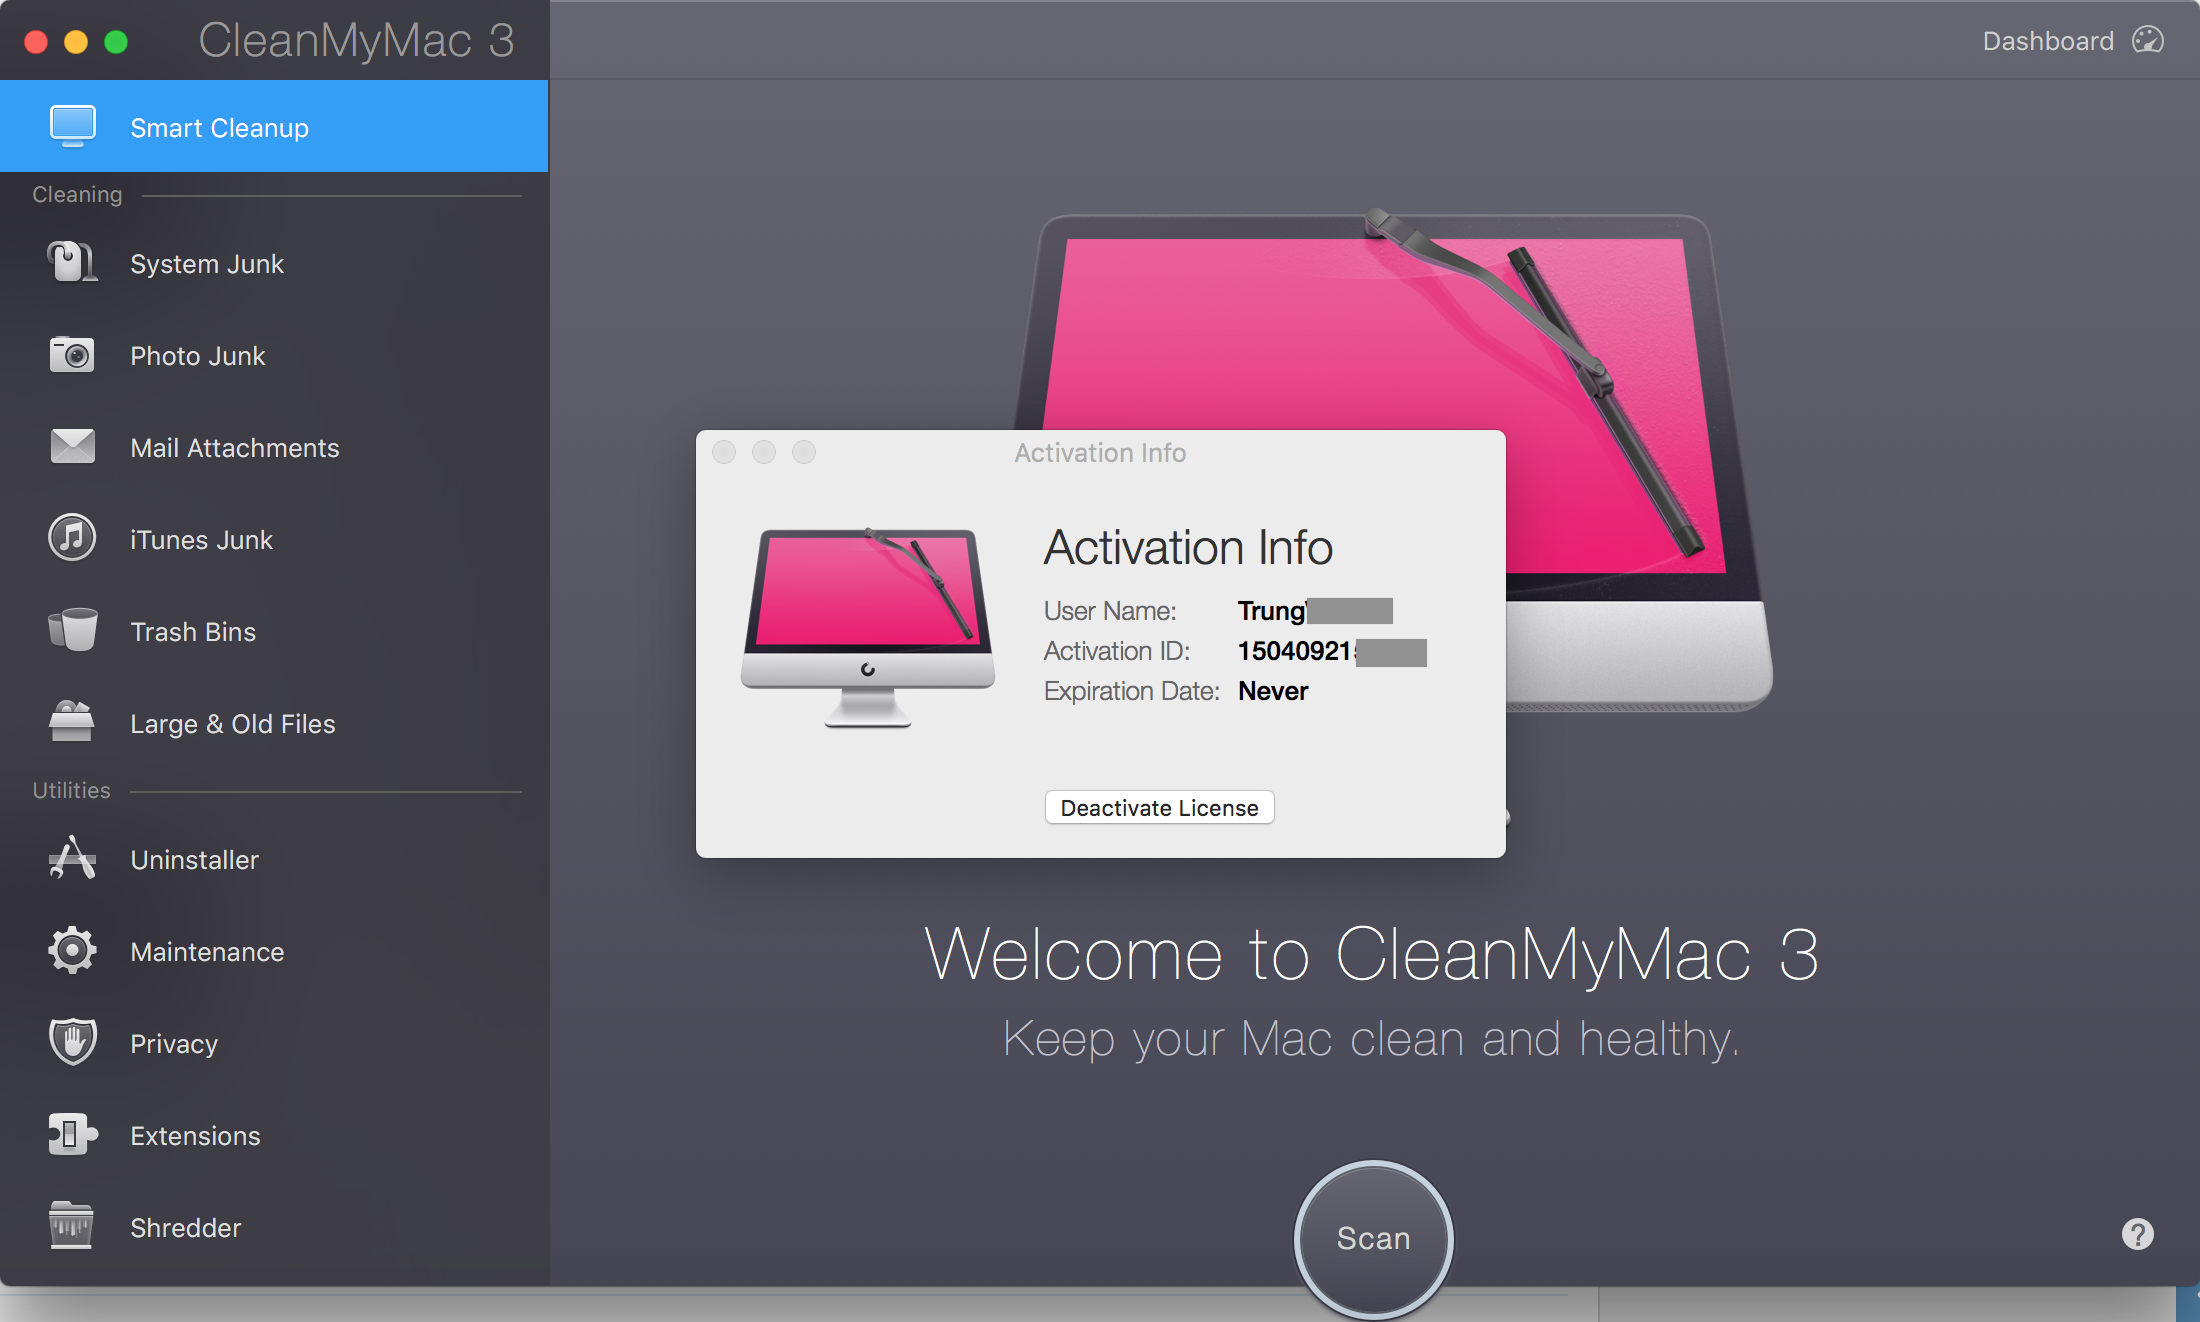 Clean mac os. CLEANMYMAC активационный номер. Clean my Mac x активационный номер. Активация clean my Mac x. Активационный номер для CLEANMYMAC X.